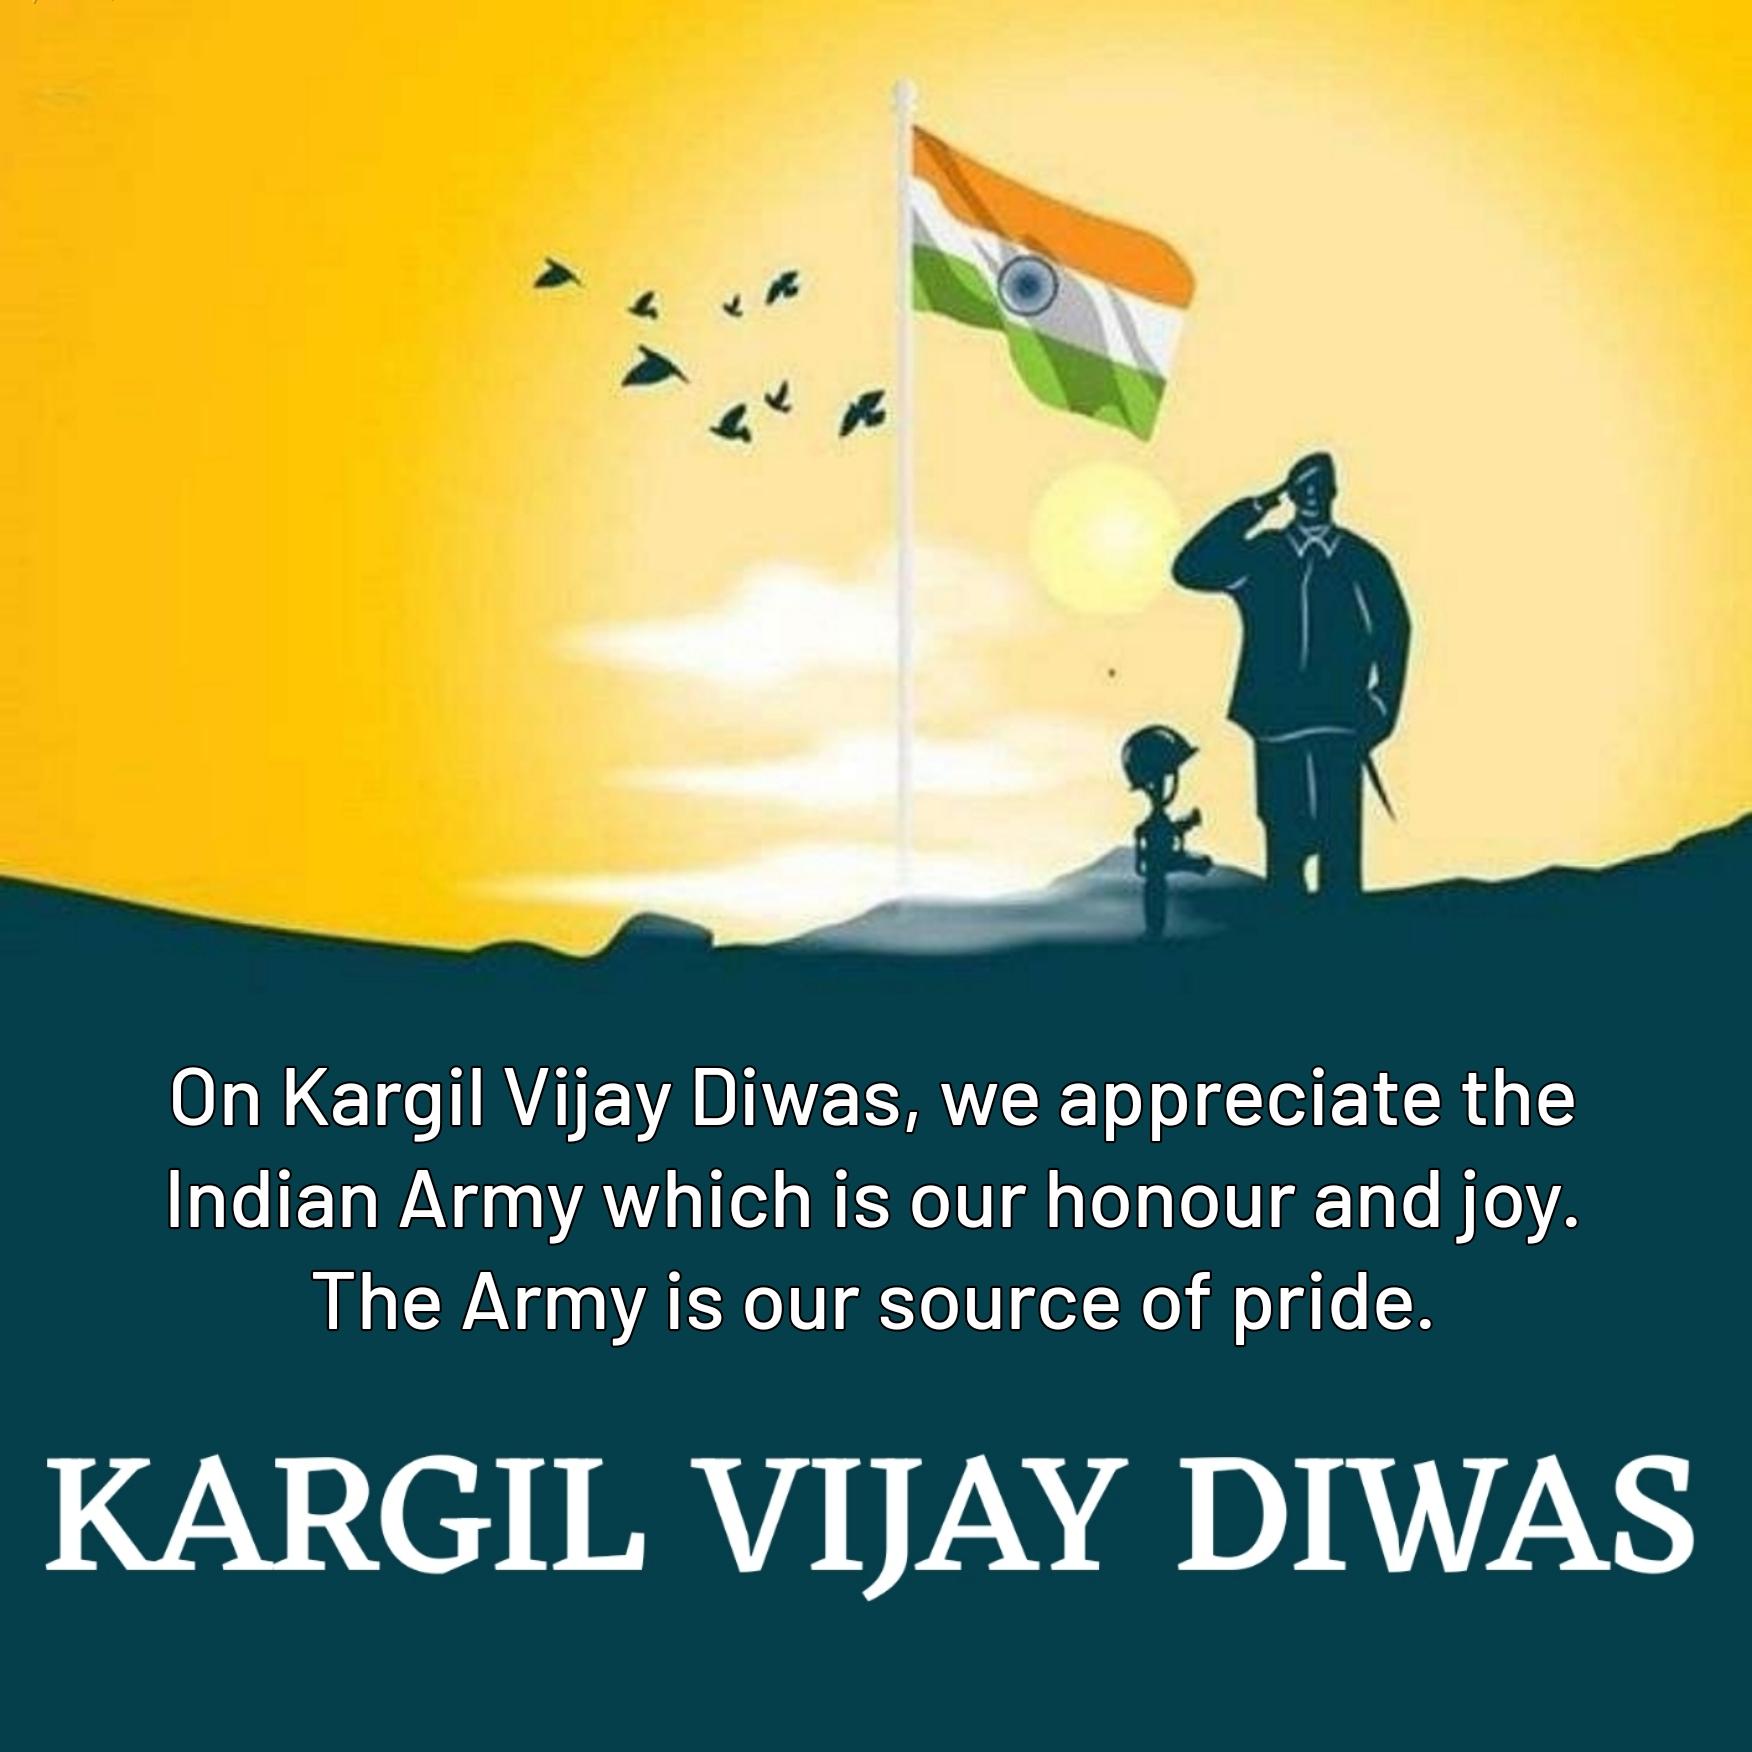 On Kargil Vijay Diwas we appreciate the Indian Army